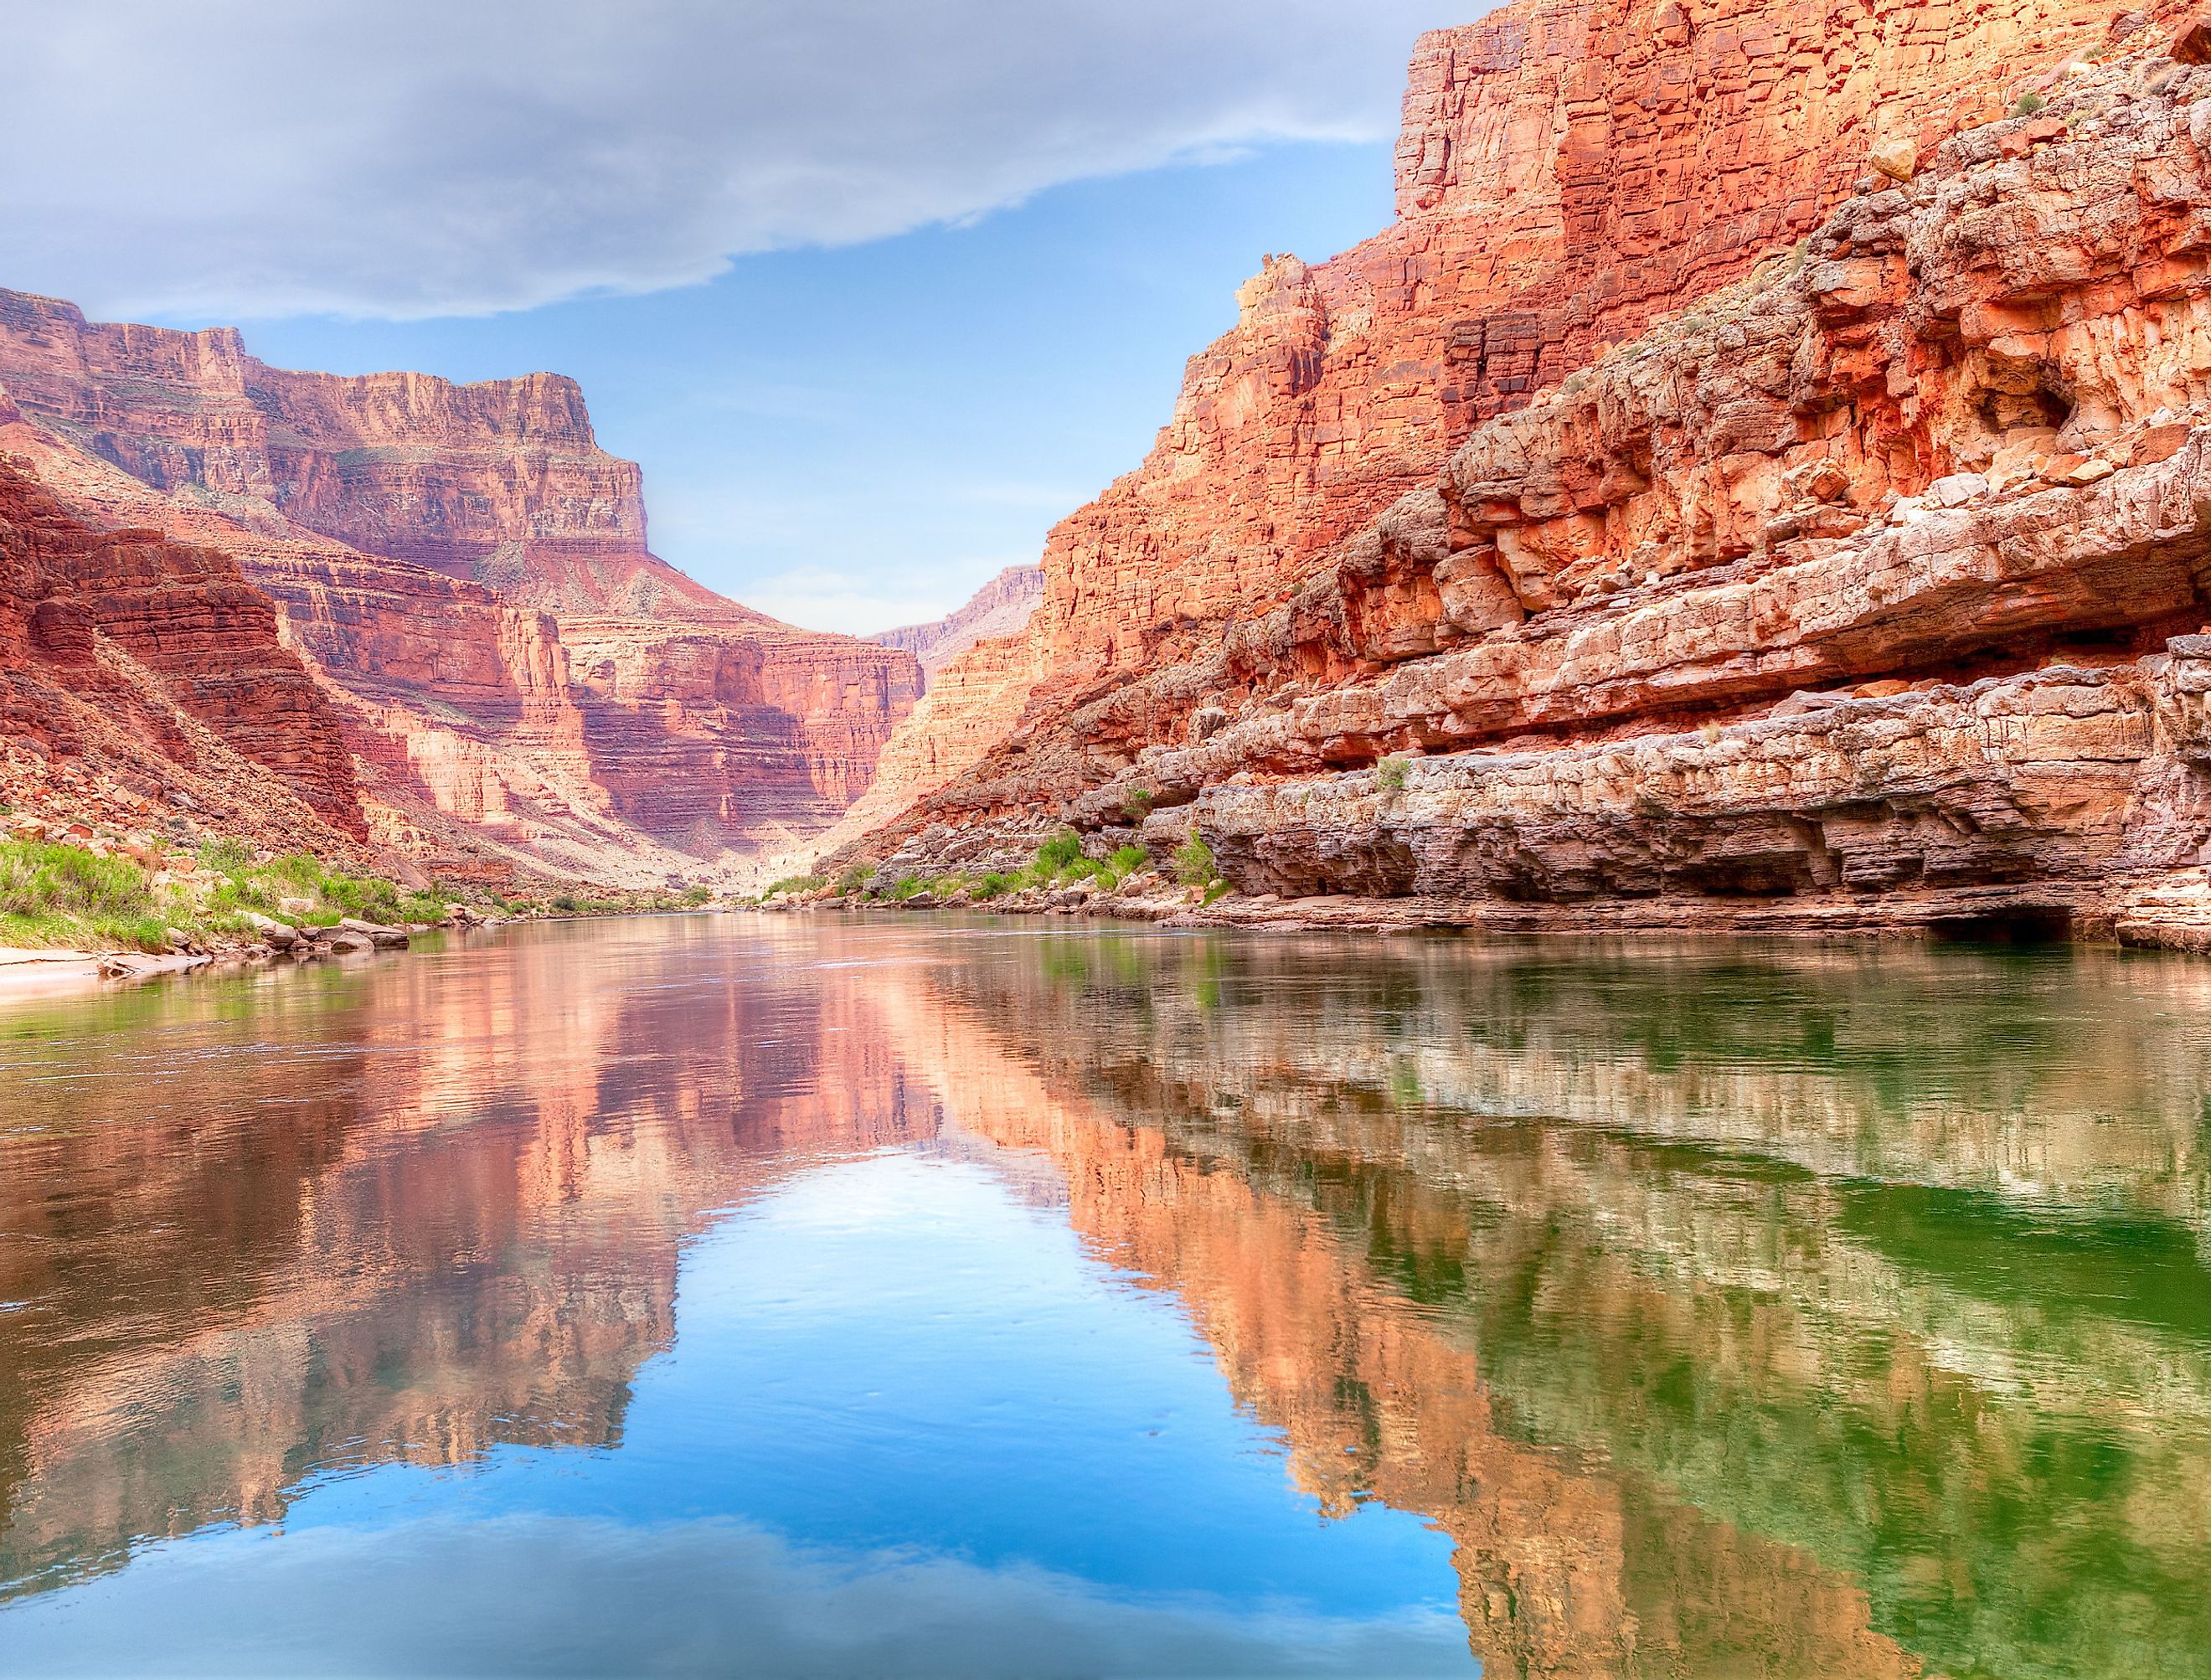 Grand Canyon, Colorado River. Image credit LHBLLC via shutterstock